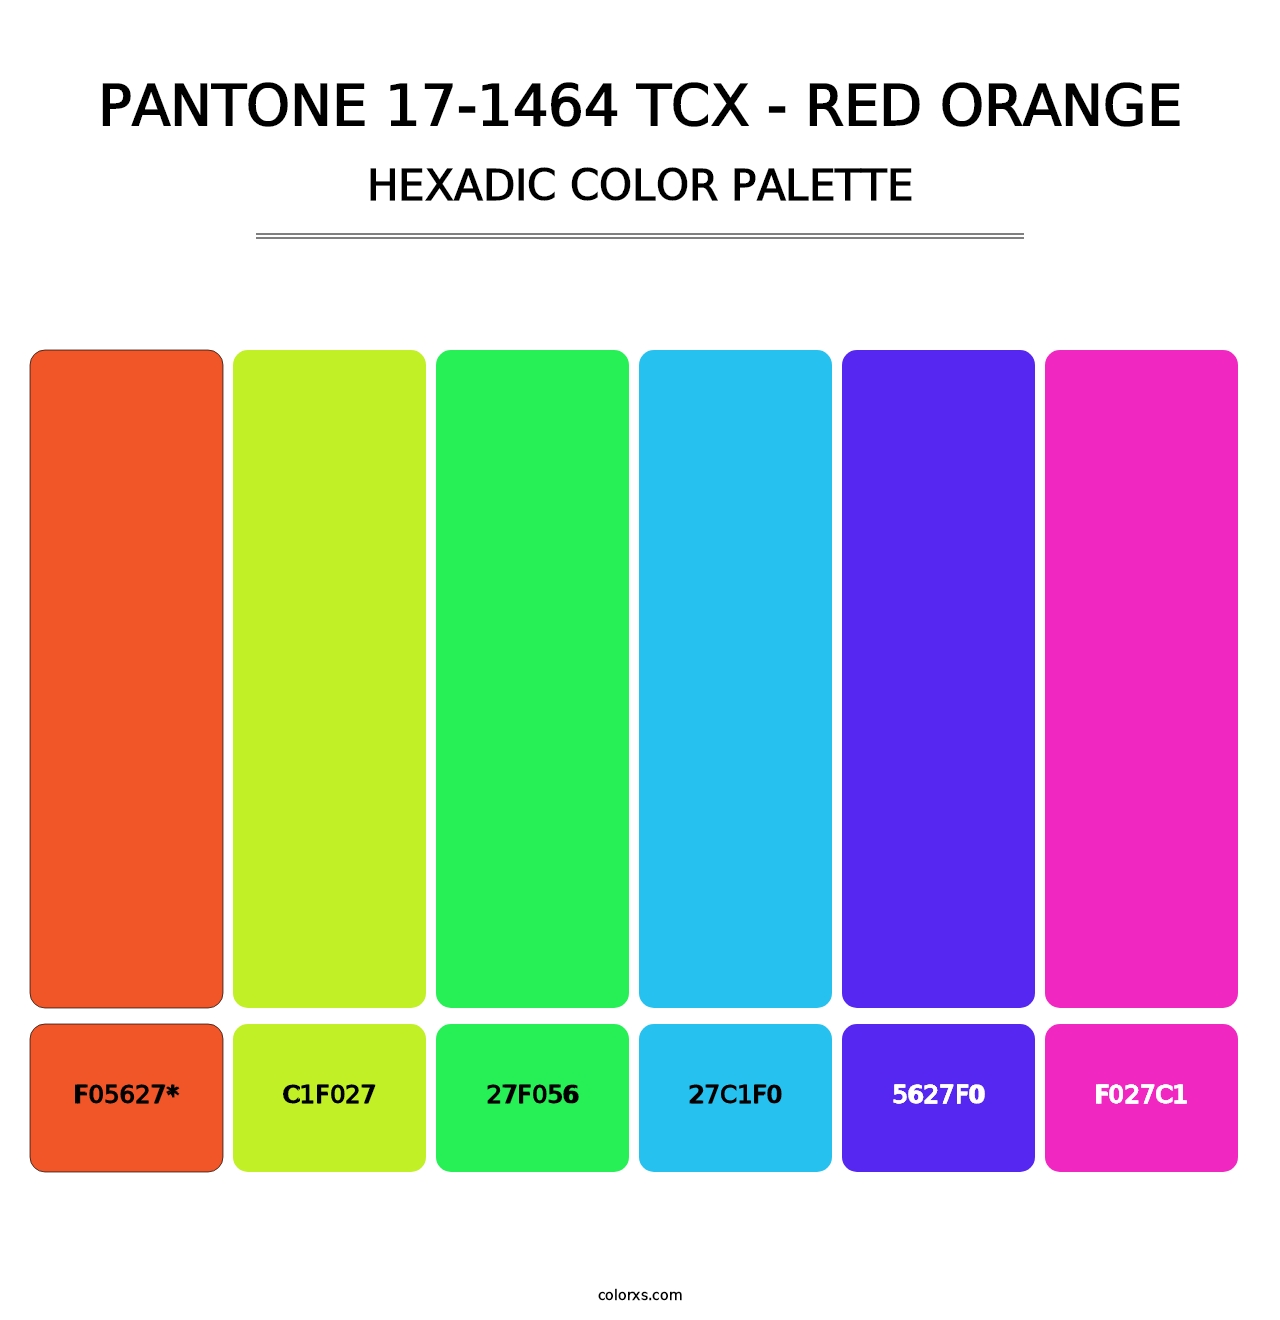 PANTONE 17-1464 TCX - Red Orange - Hexadic Color Palette